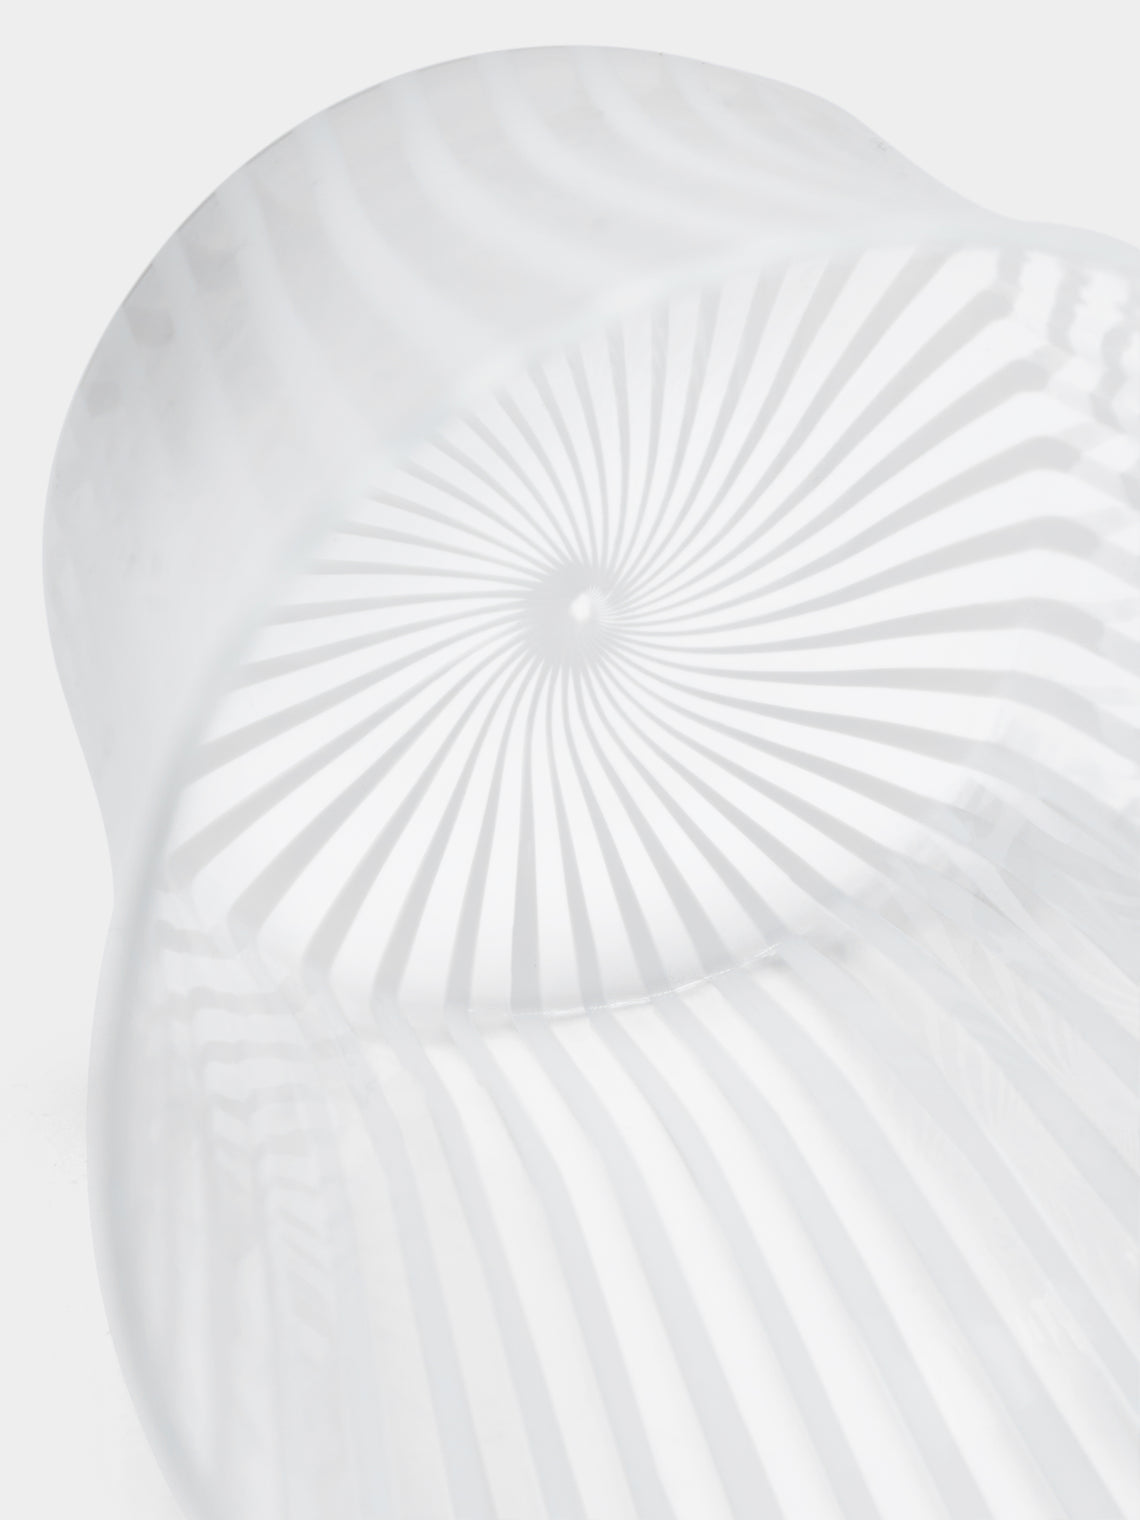 NasonMoretti - Canova Murano Glass Tumbler - White - ABASK